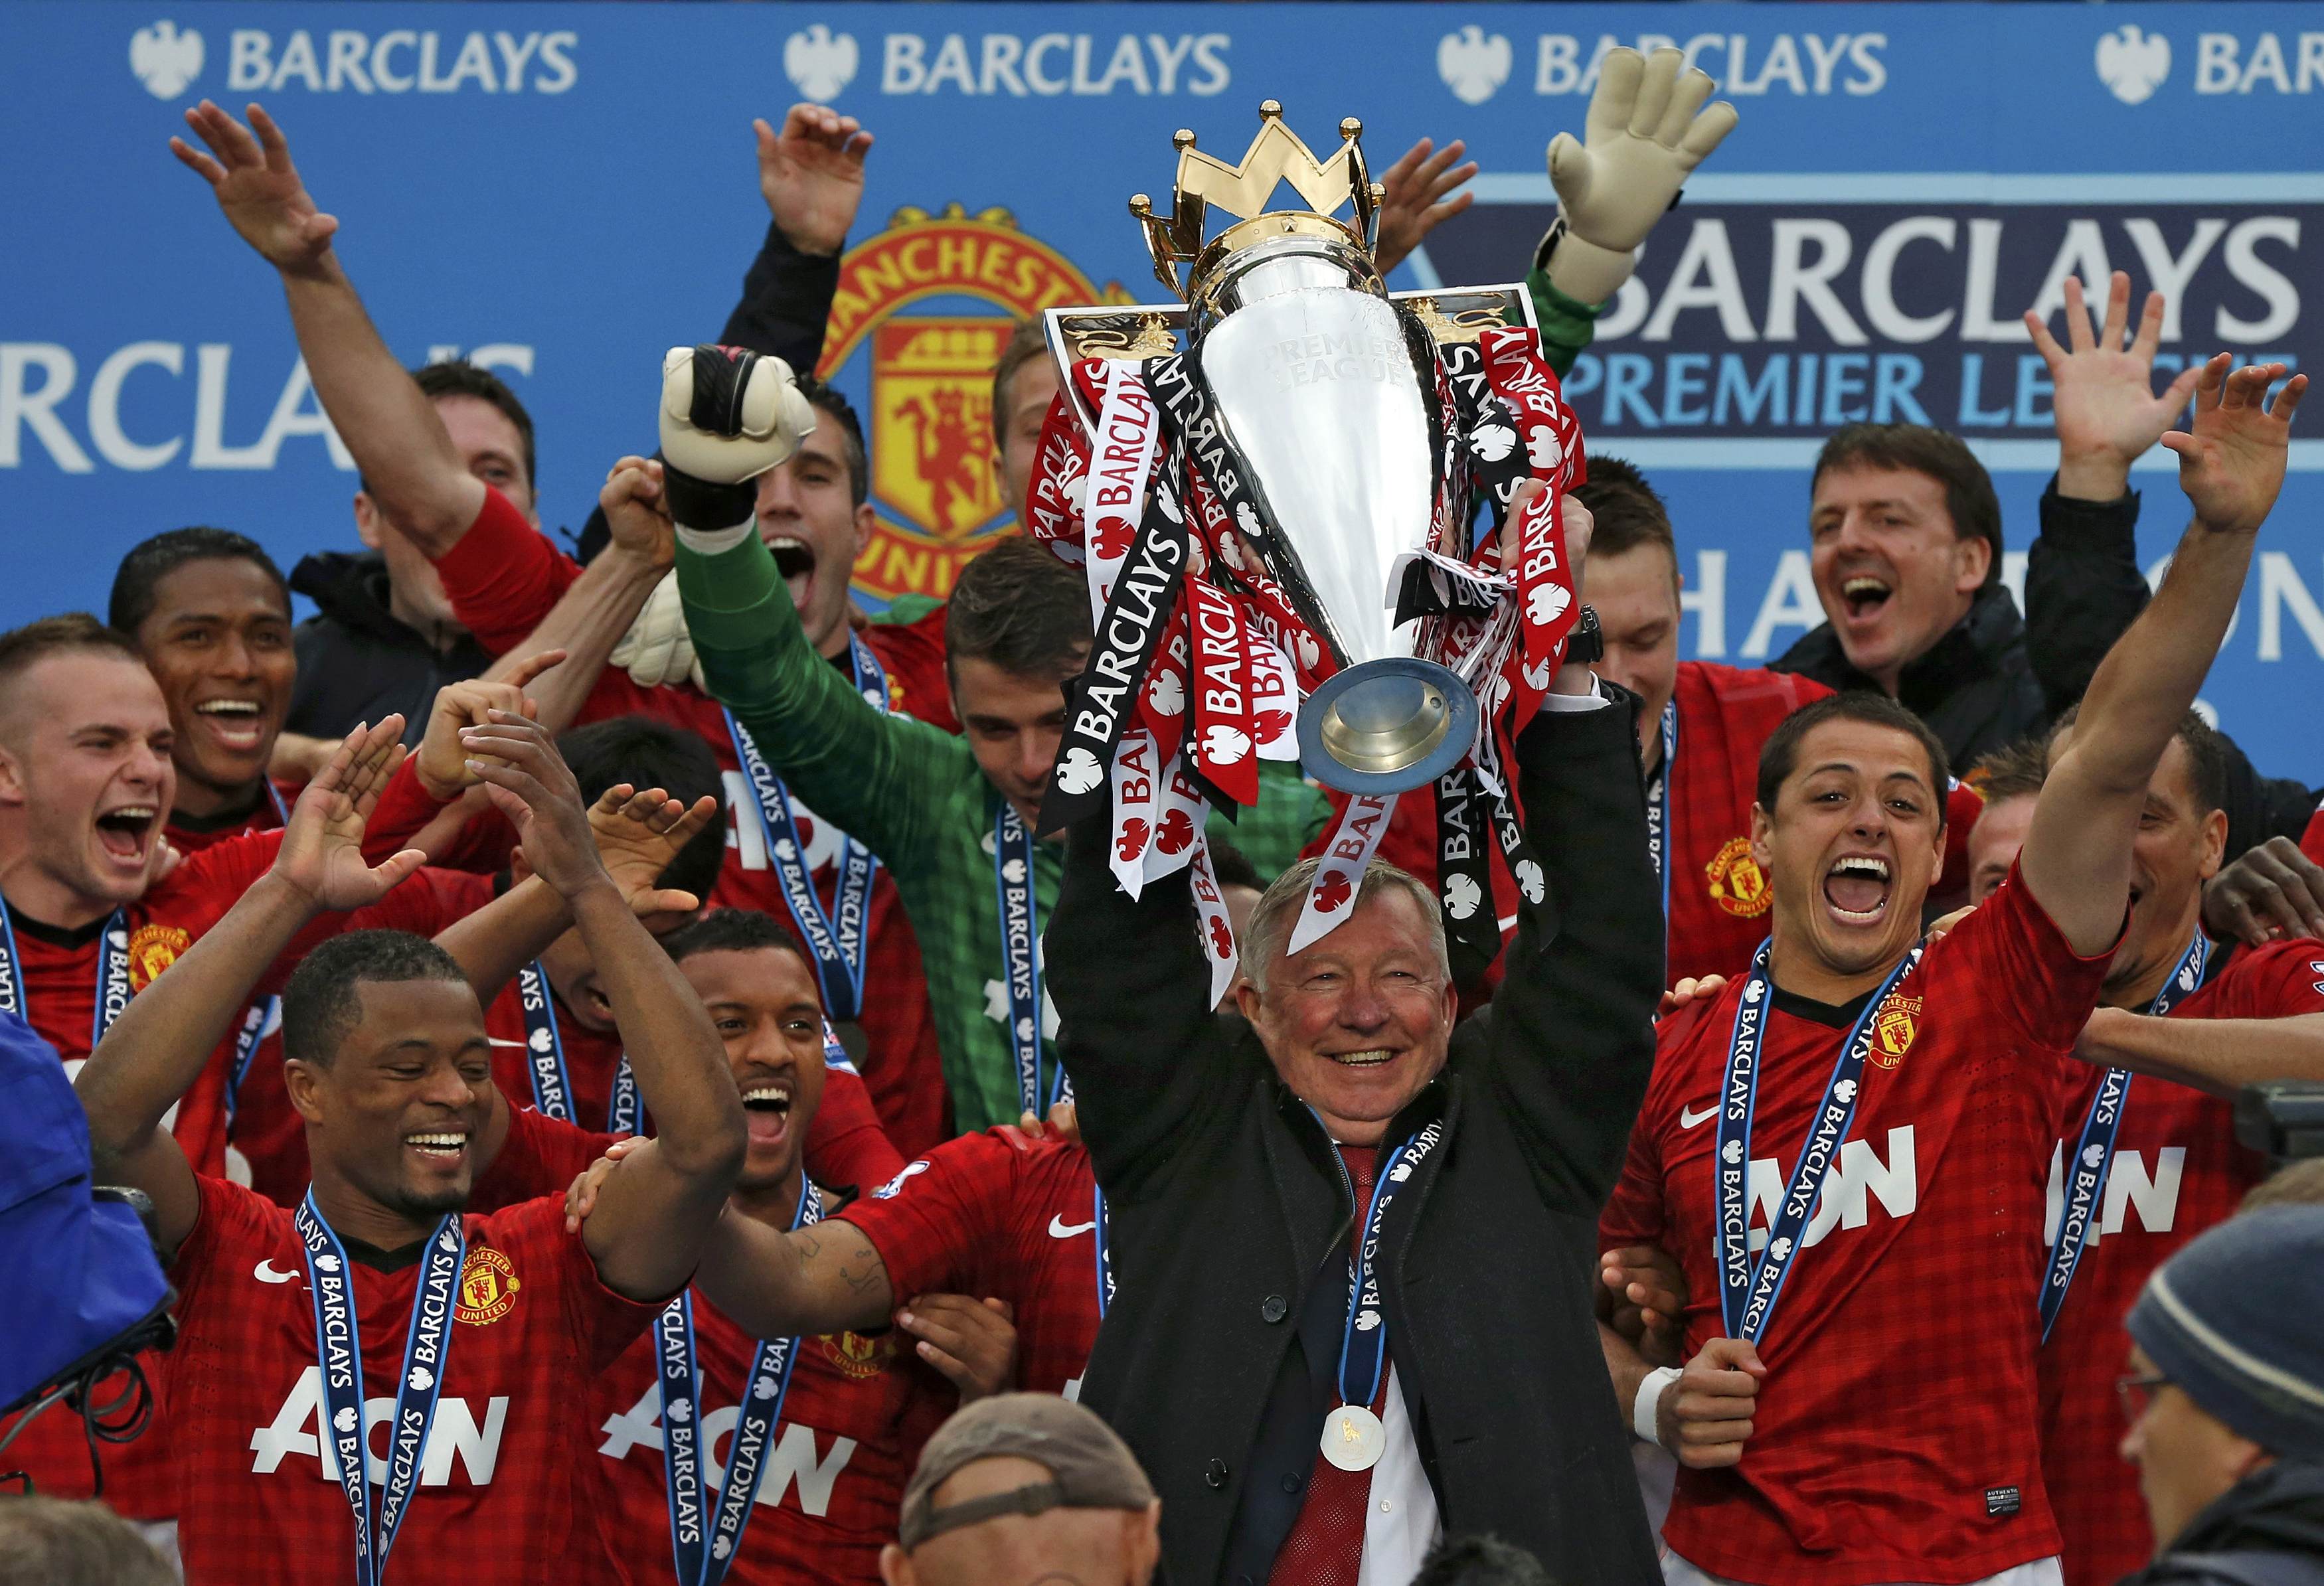 Sir Alex Ferguson celebrating championship win.  Image courtesy of Gmanetwork.com